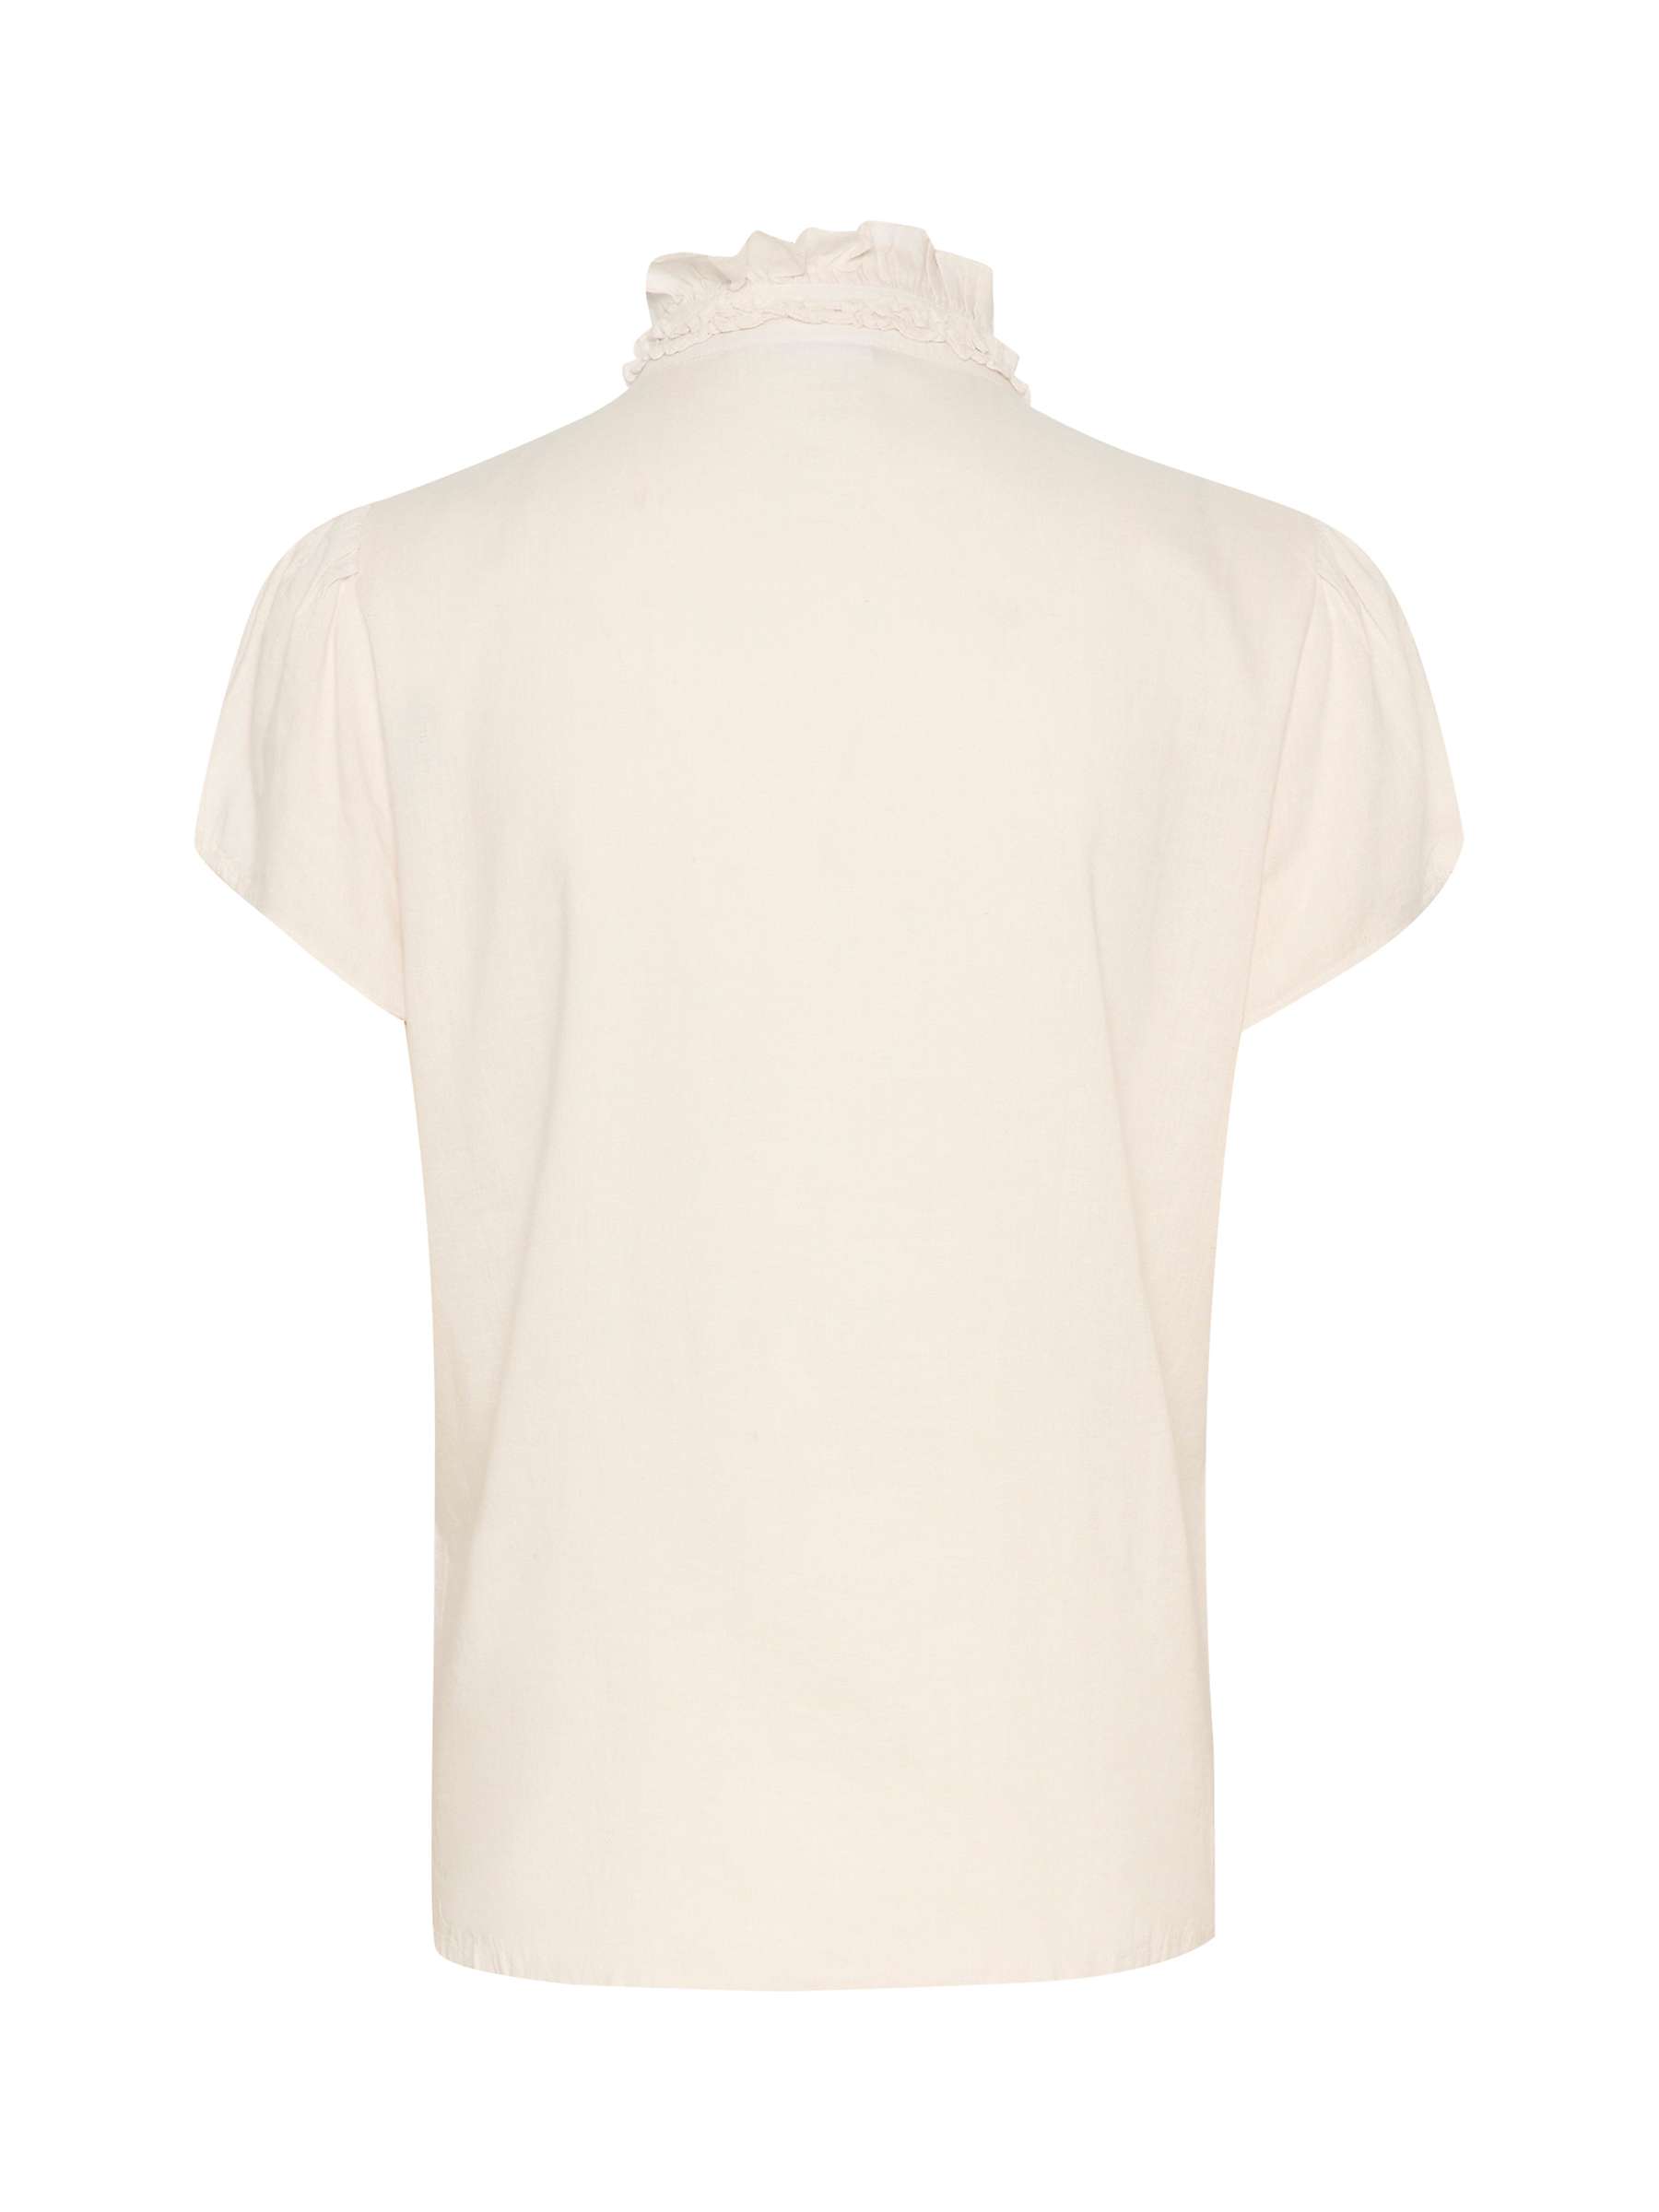 Buy Saint Tropez Elli Ruffle Trim Shirt, Ice Online at johnlewis.com